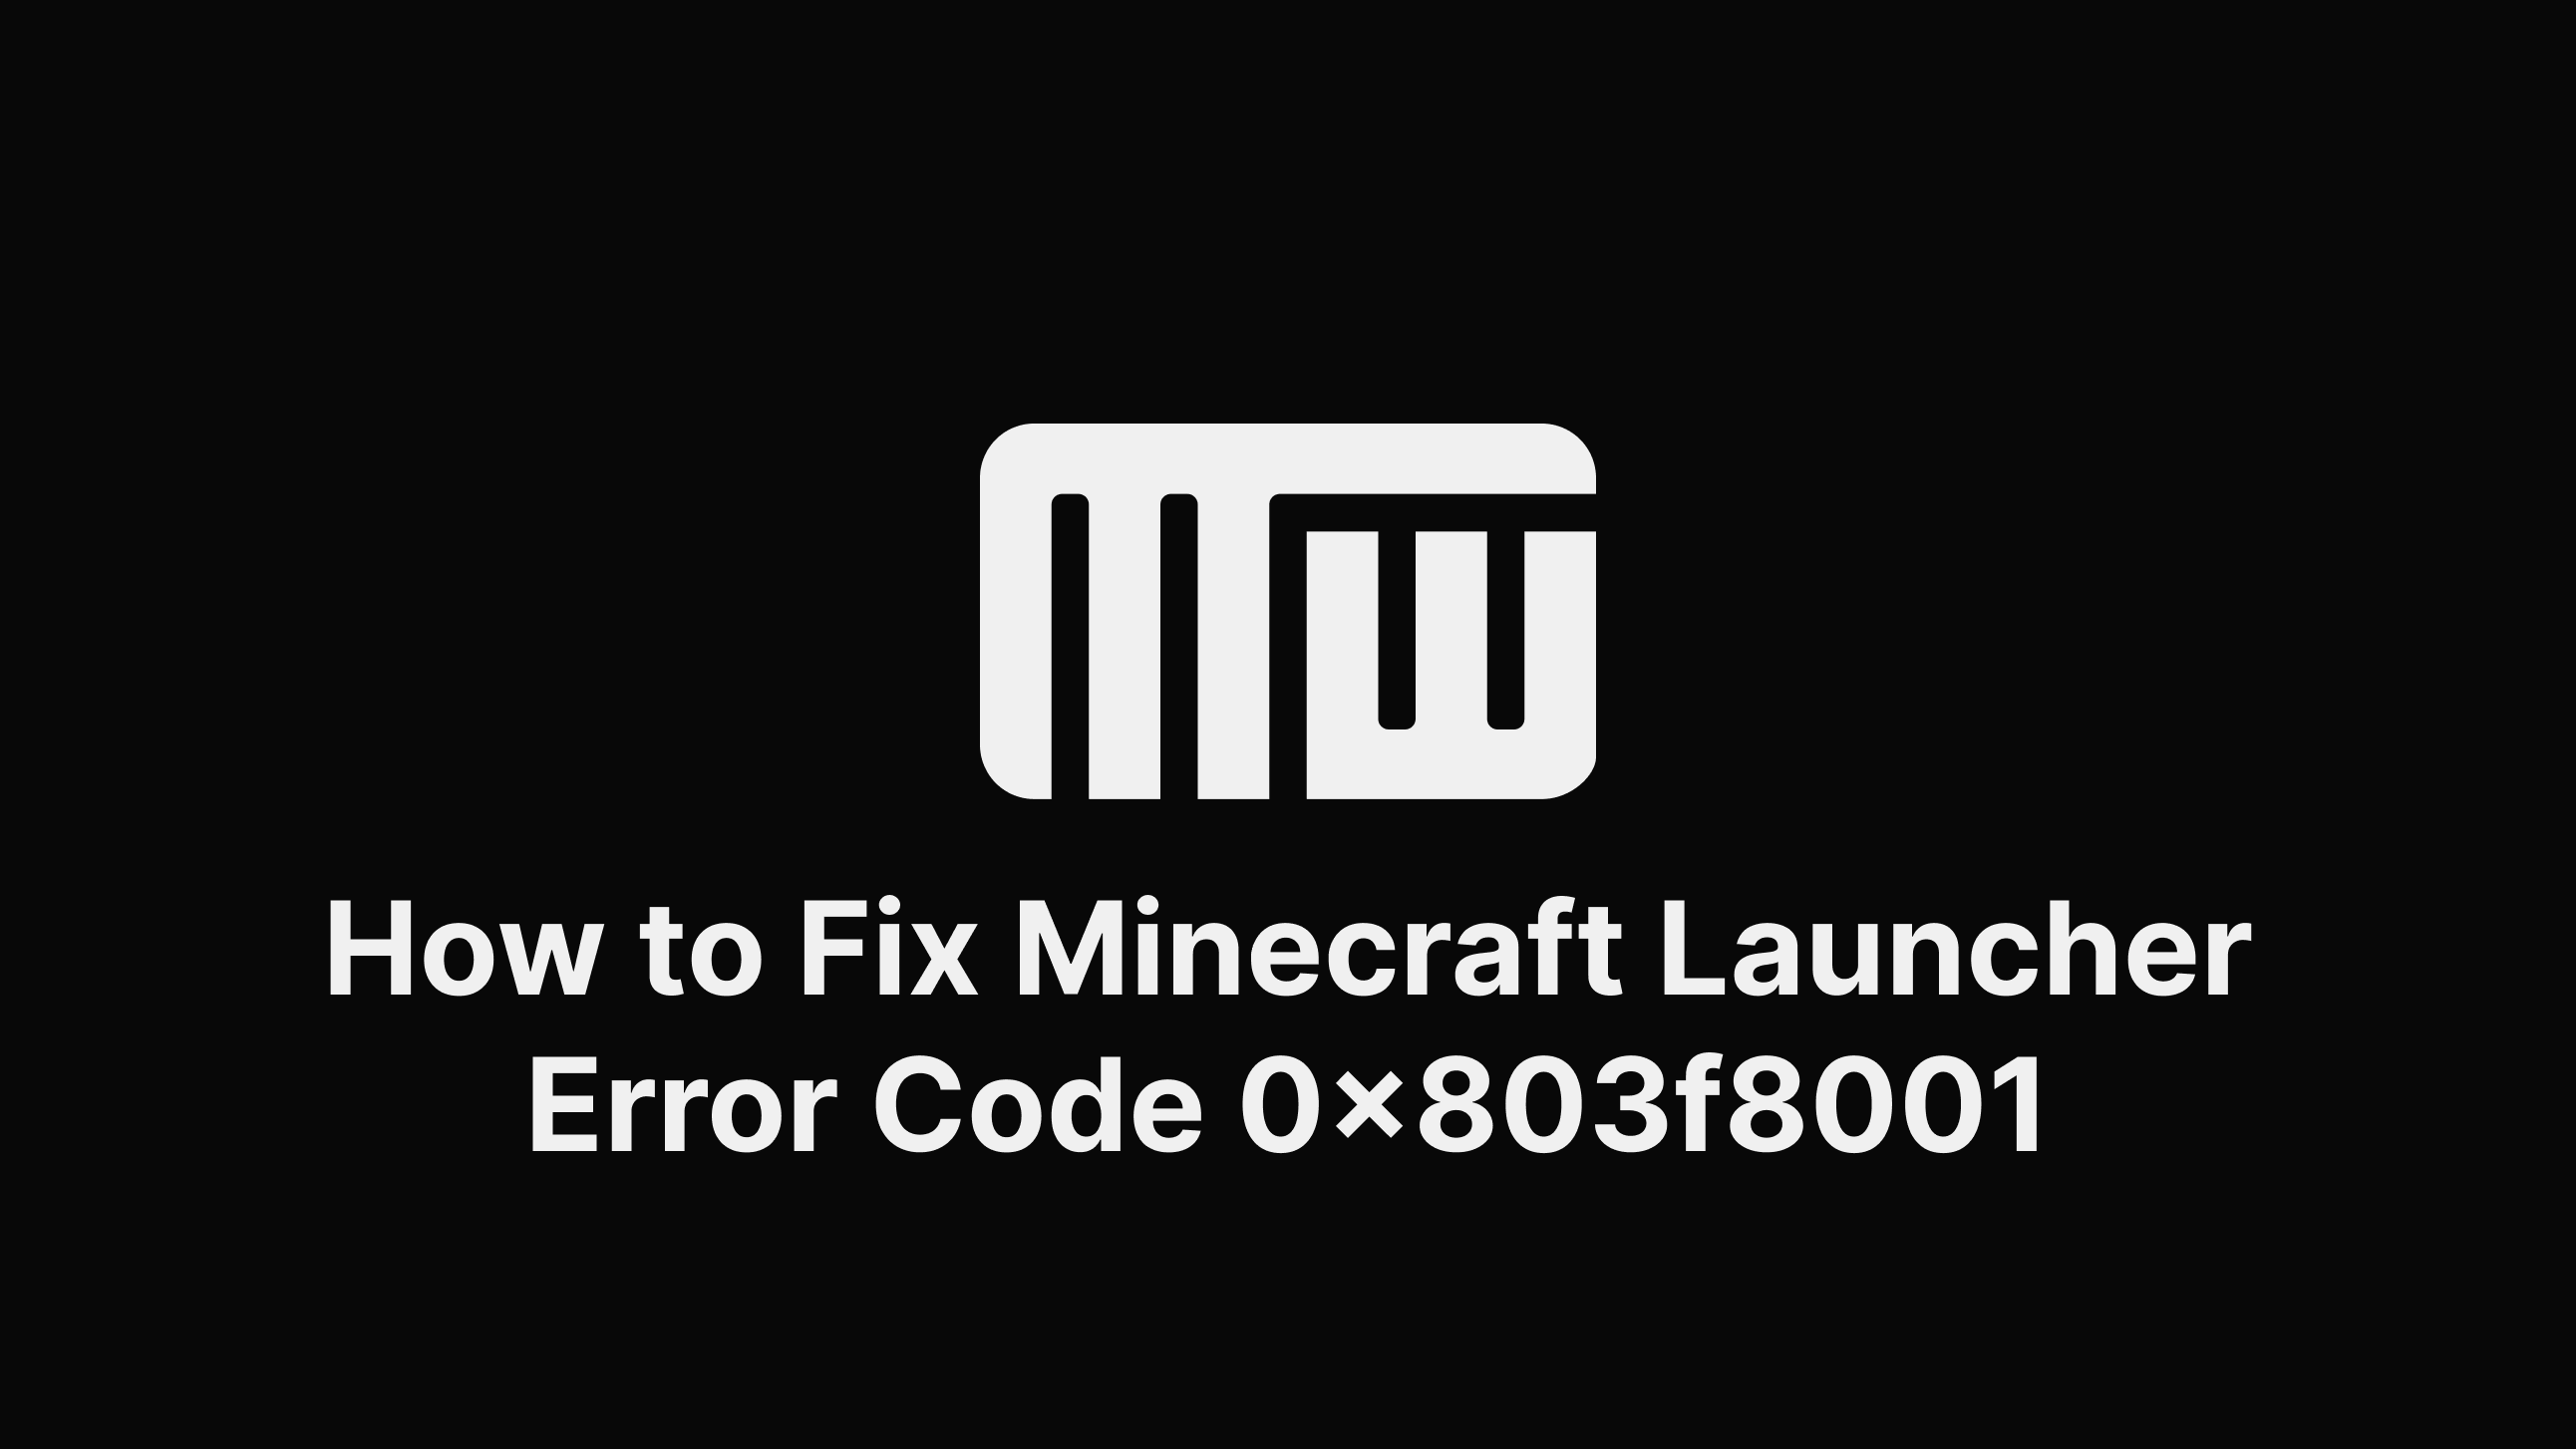 error code 5 while updating minecraft launcher